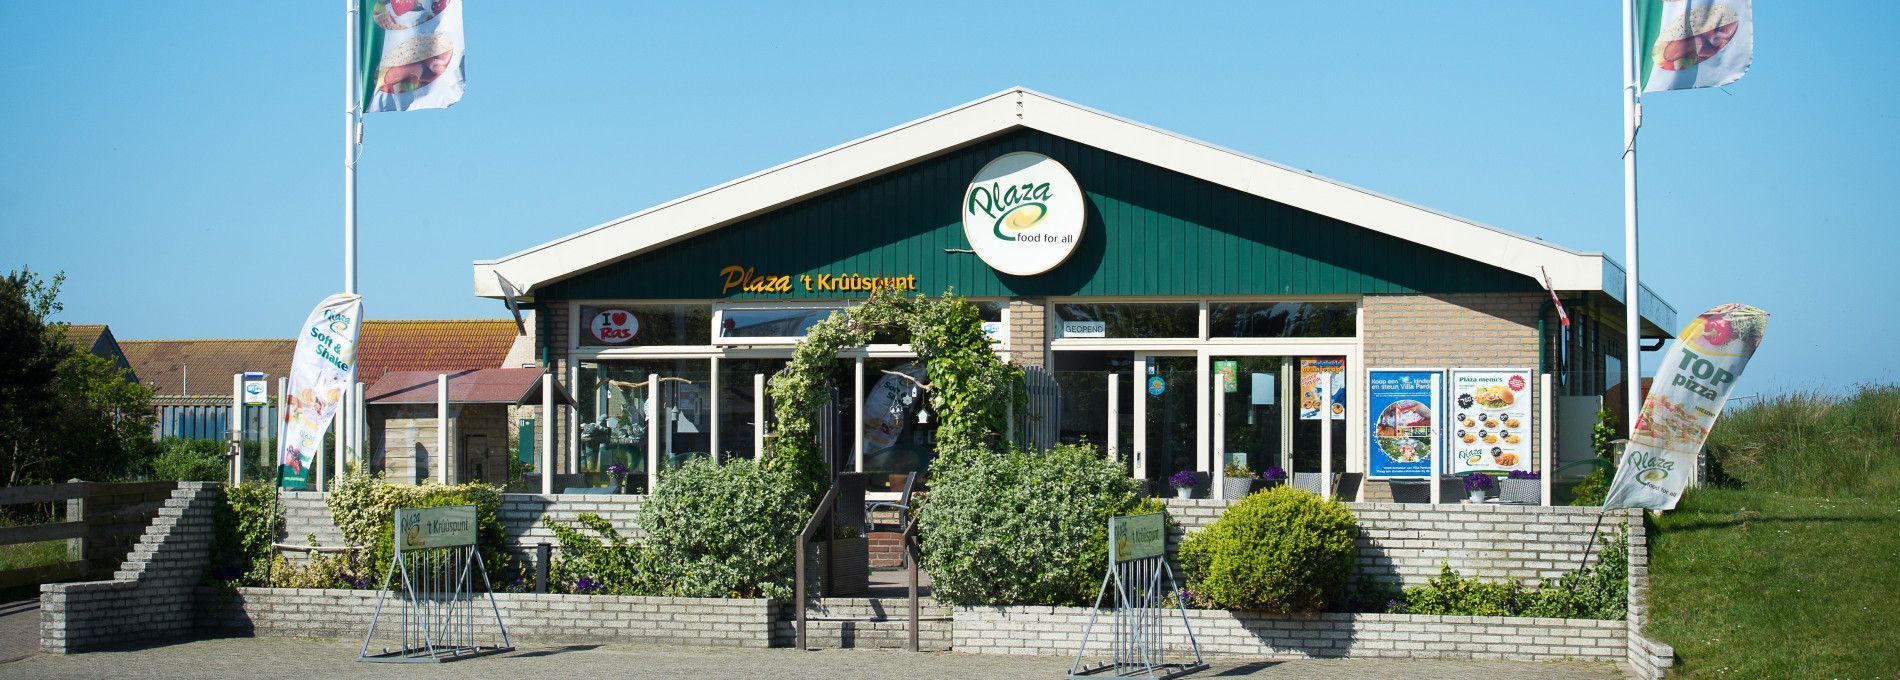 Snackbar Plaza 't Kruuspunt - Tourist Information “VVV” Ameland